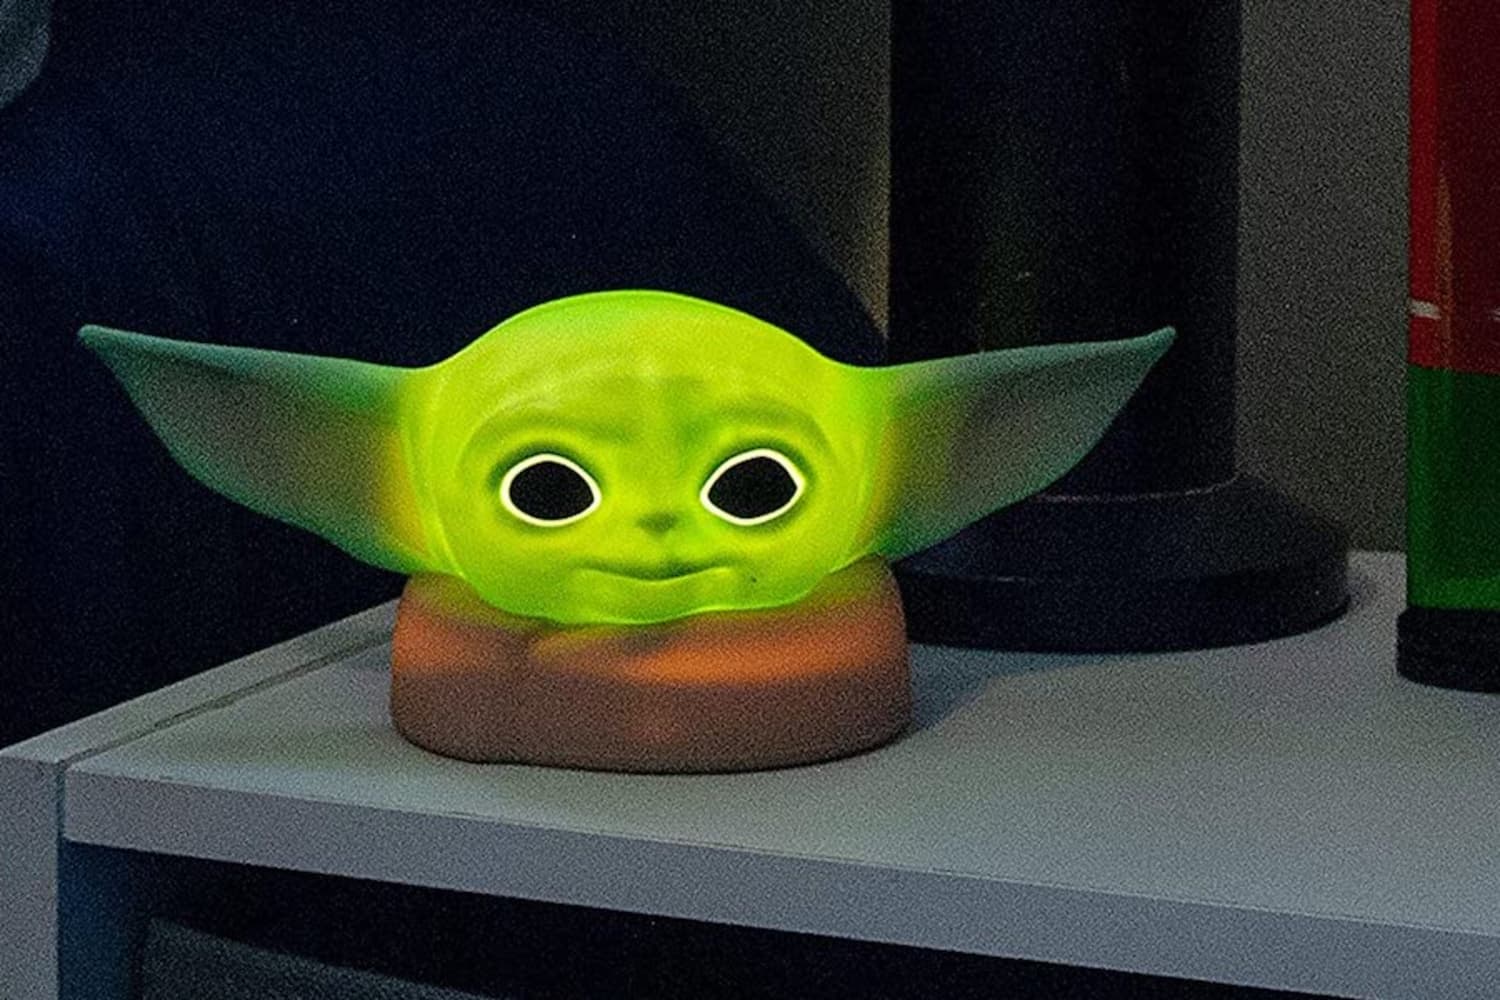 Star Wars Debuts Baby Yoda Chia Pet